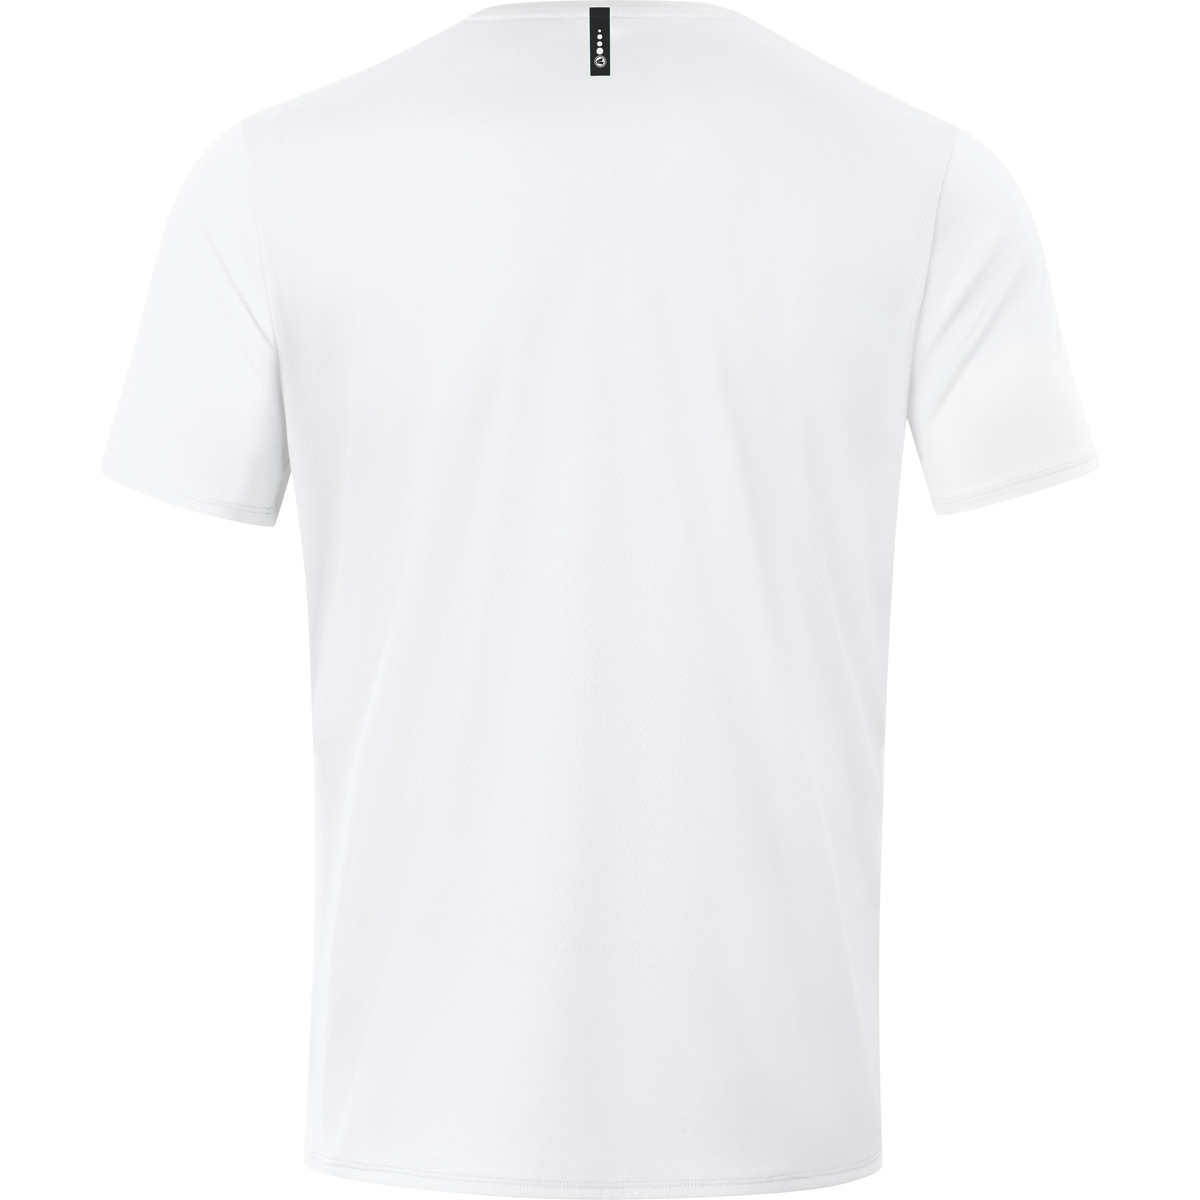 Champ Kinder, weiß, T-Shirt 164, JAKO 2.0 Gr. 6120